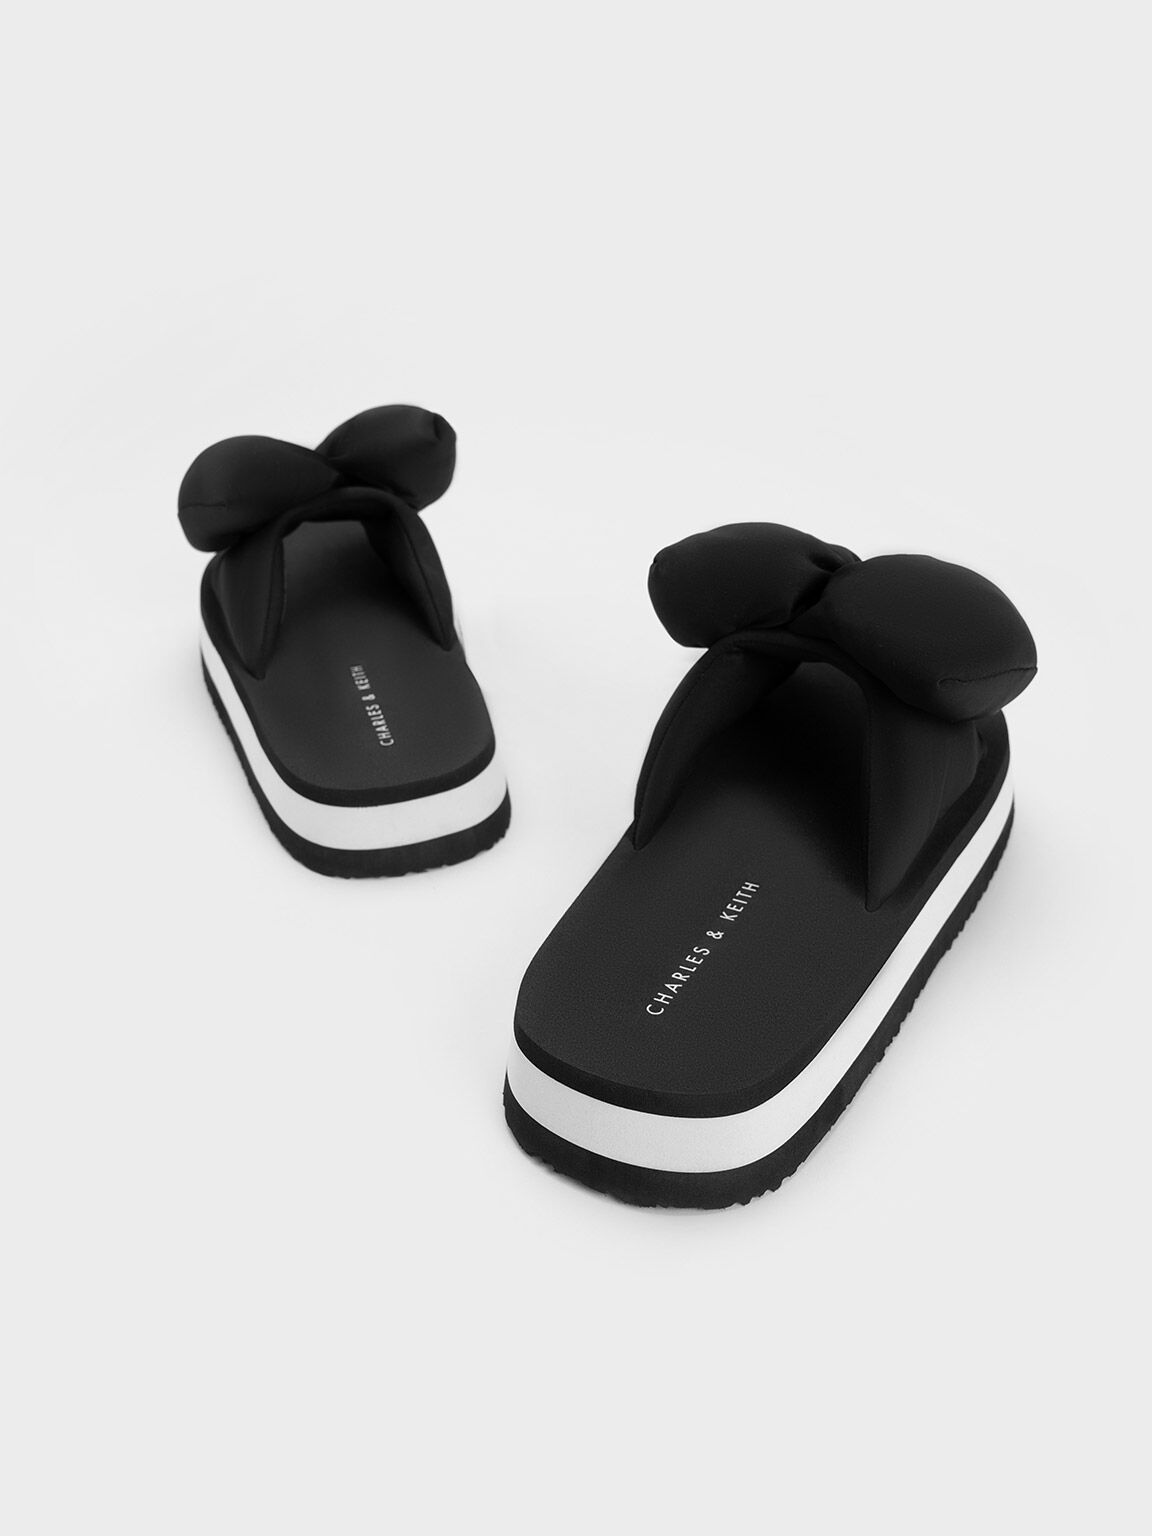 Sandal Slide Puffy Bow, Black, hi-res